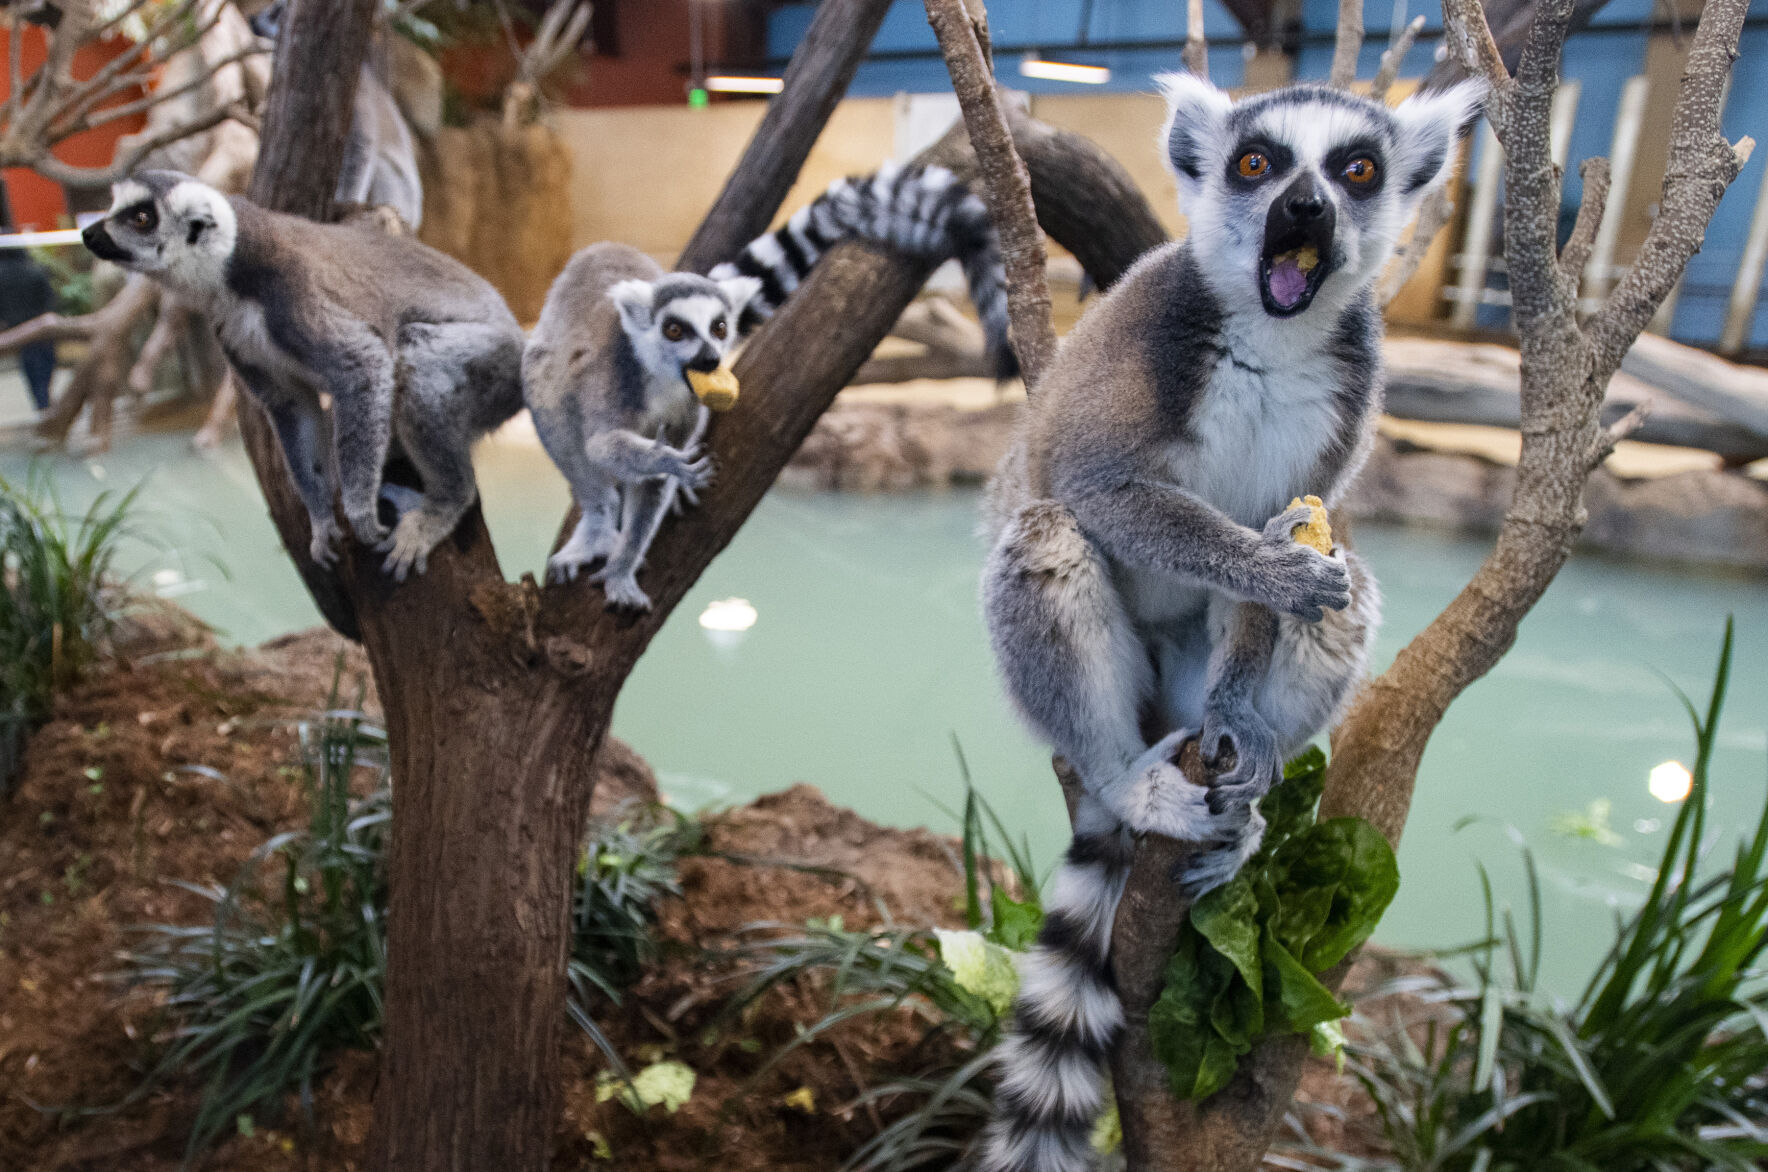 See photos of baby ring-tailed lemur born at Michigan zoo - mlive.com